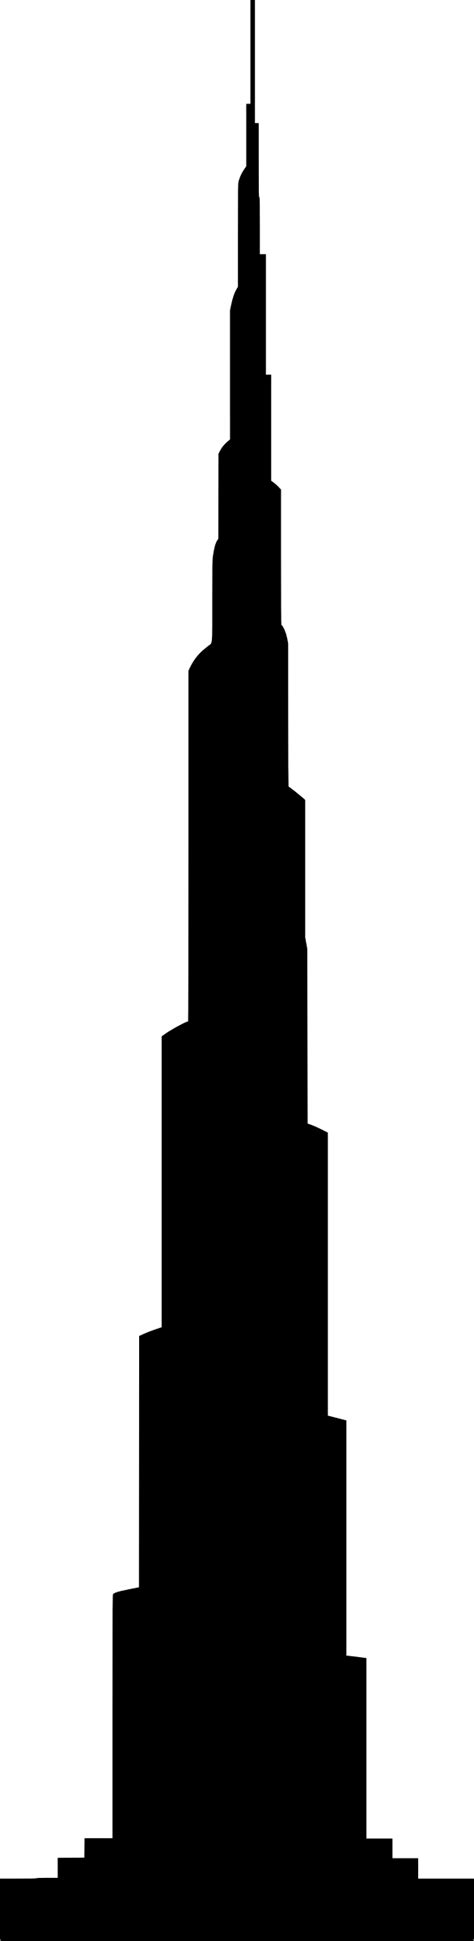 Burj Khalifa Silhouette Vector Clipart Image Free Stock Photo